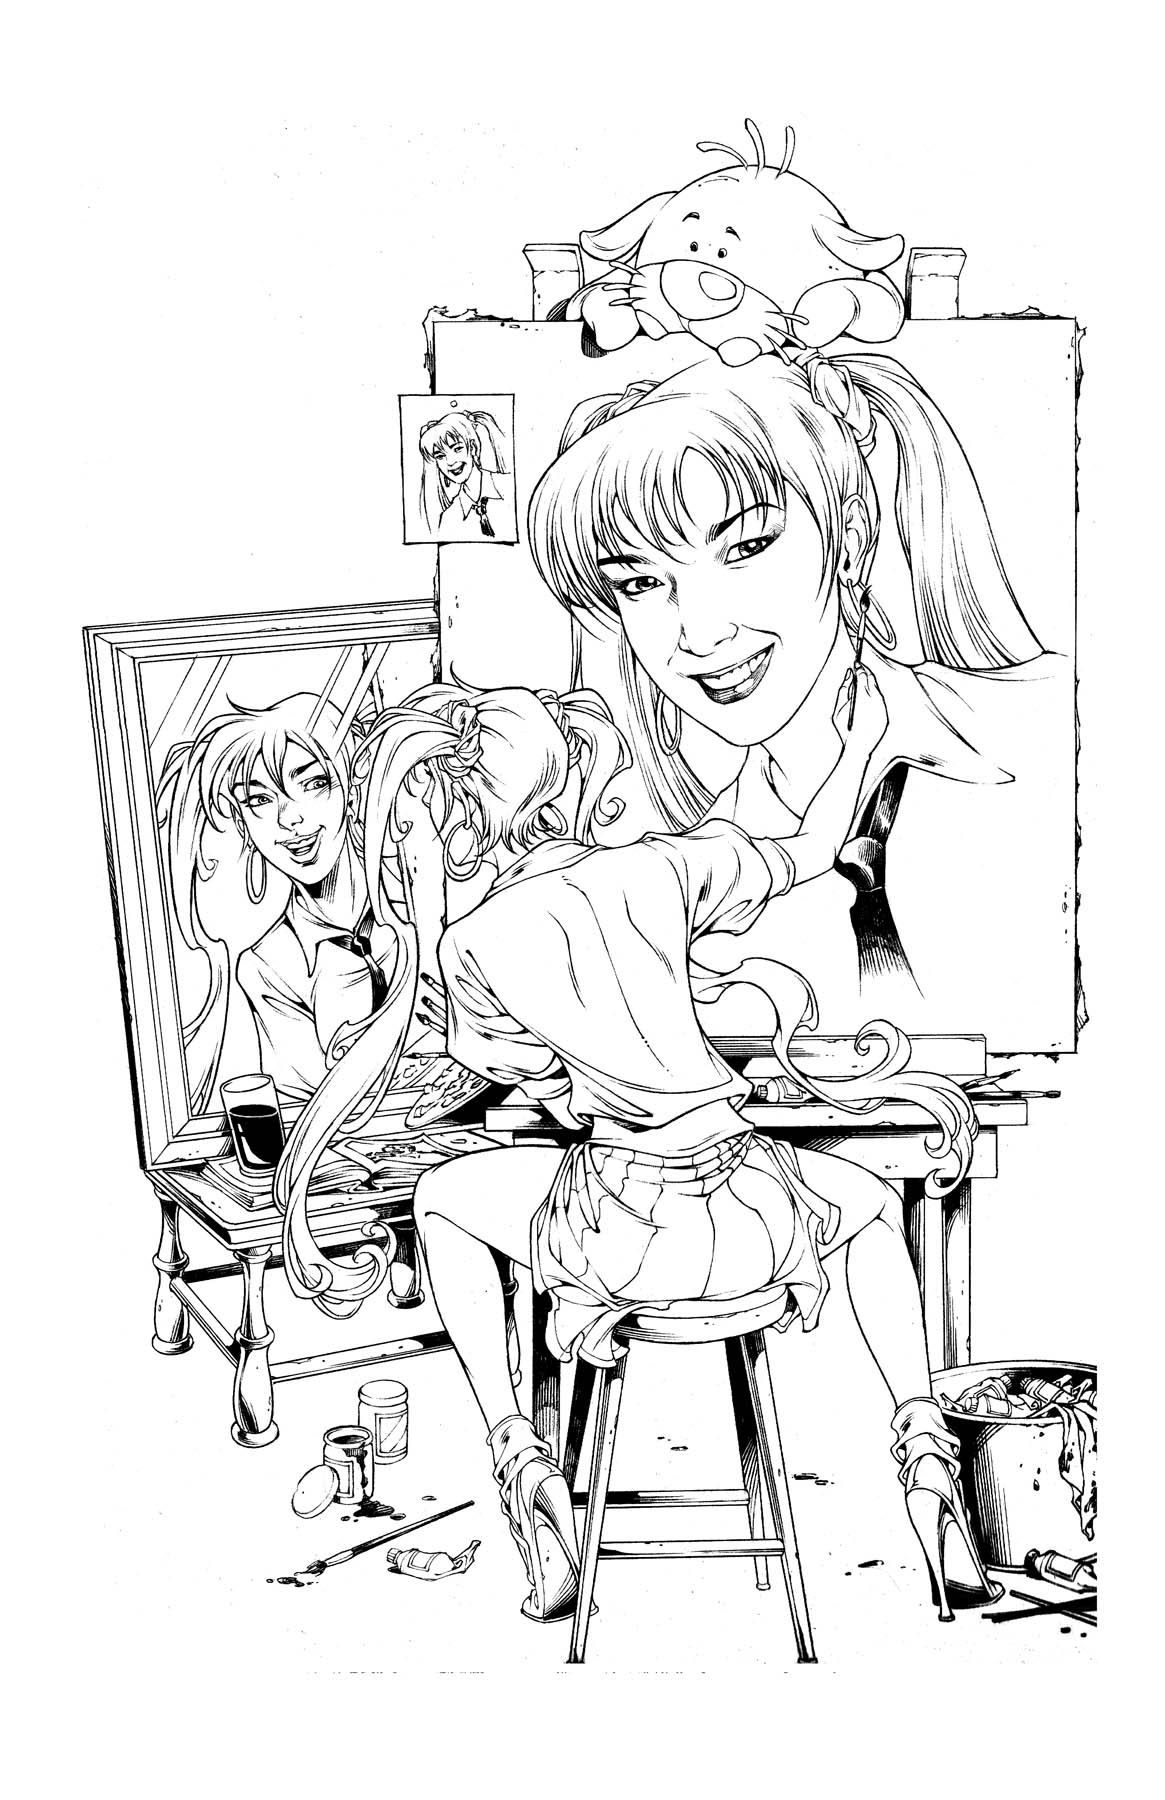 BANZAI GIRL: SELF-PORTRAIT IN THREES! (Line Art) by Jinky Coronado